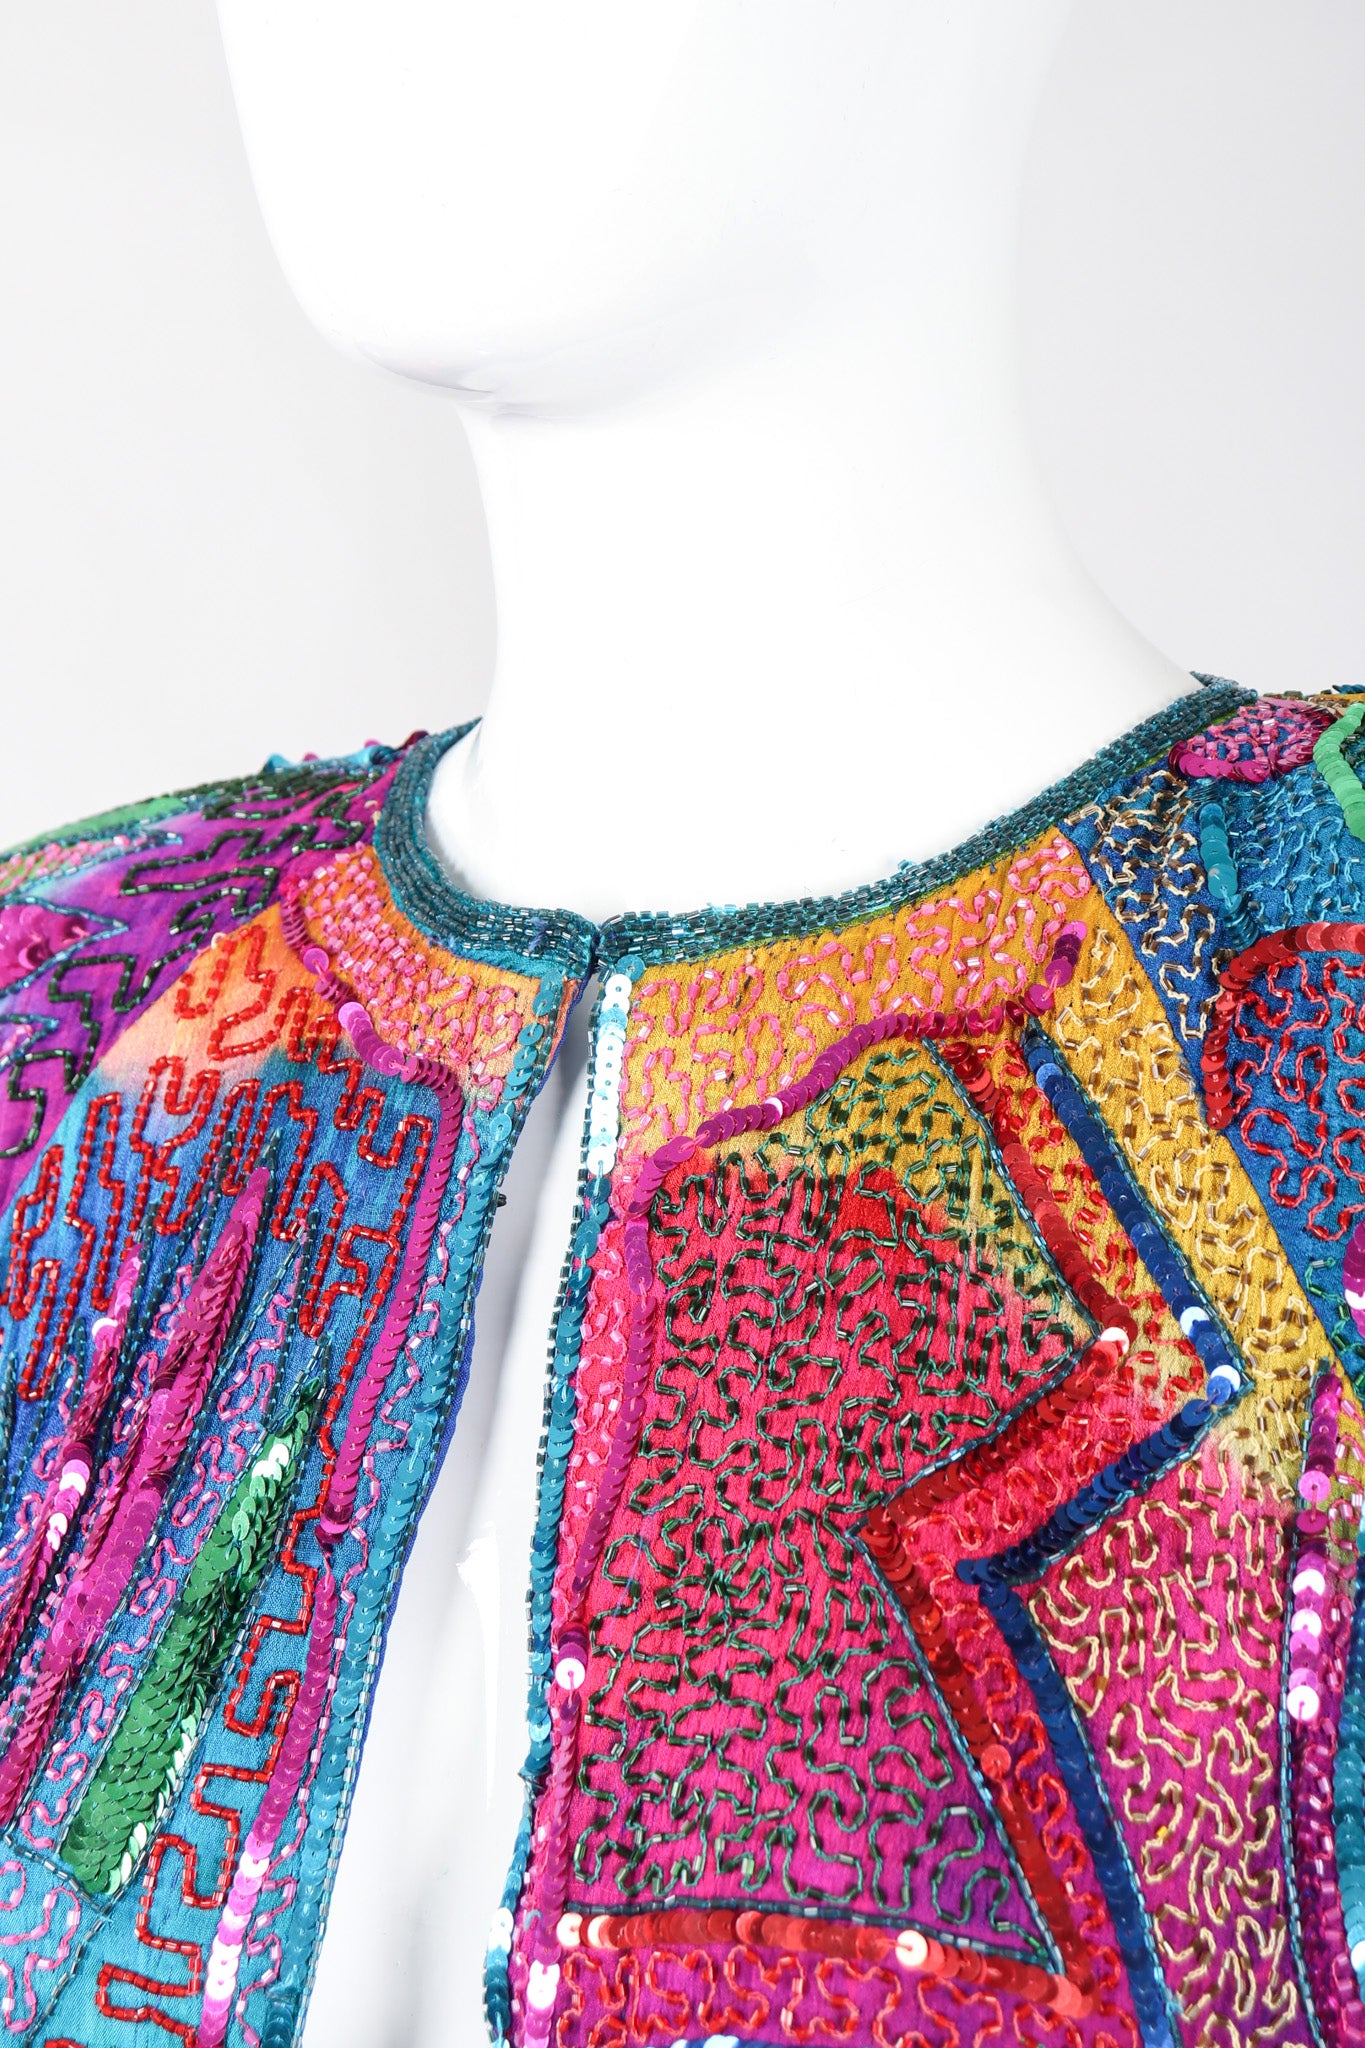 Recess Los Angeles Vintage Judith Ann Creations Rainbow Lisa Frank Beaded Swing Coat